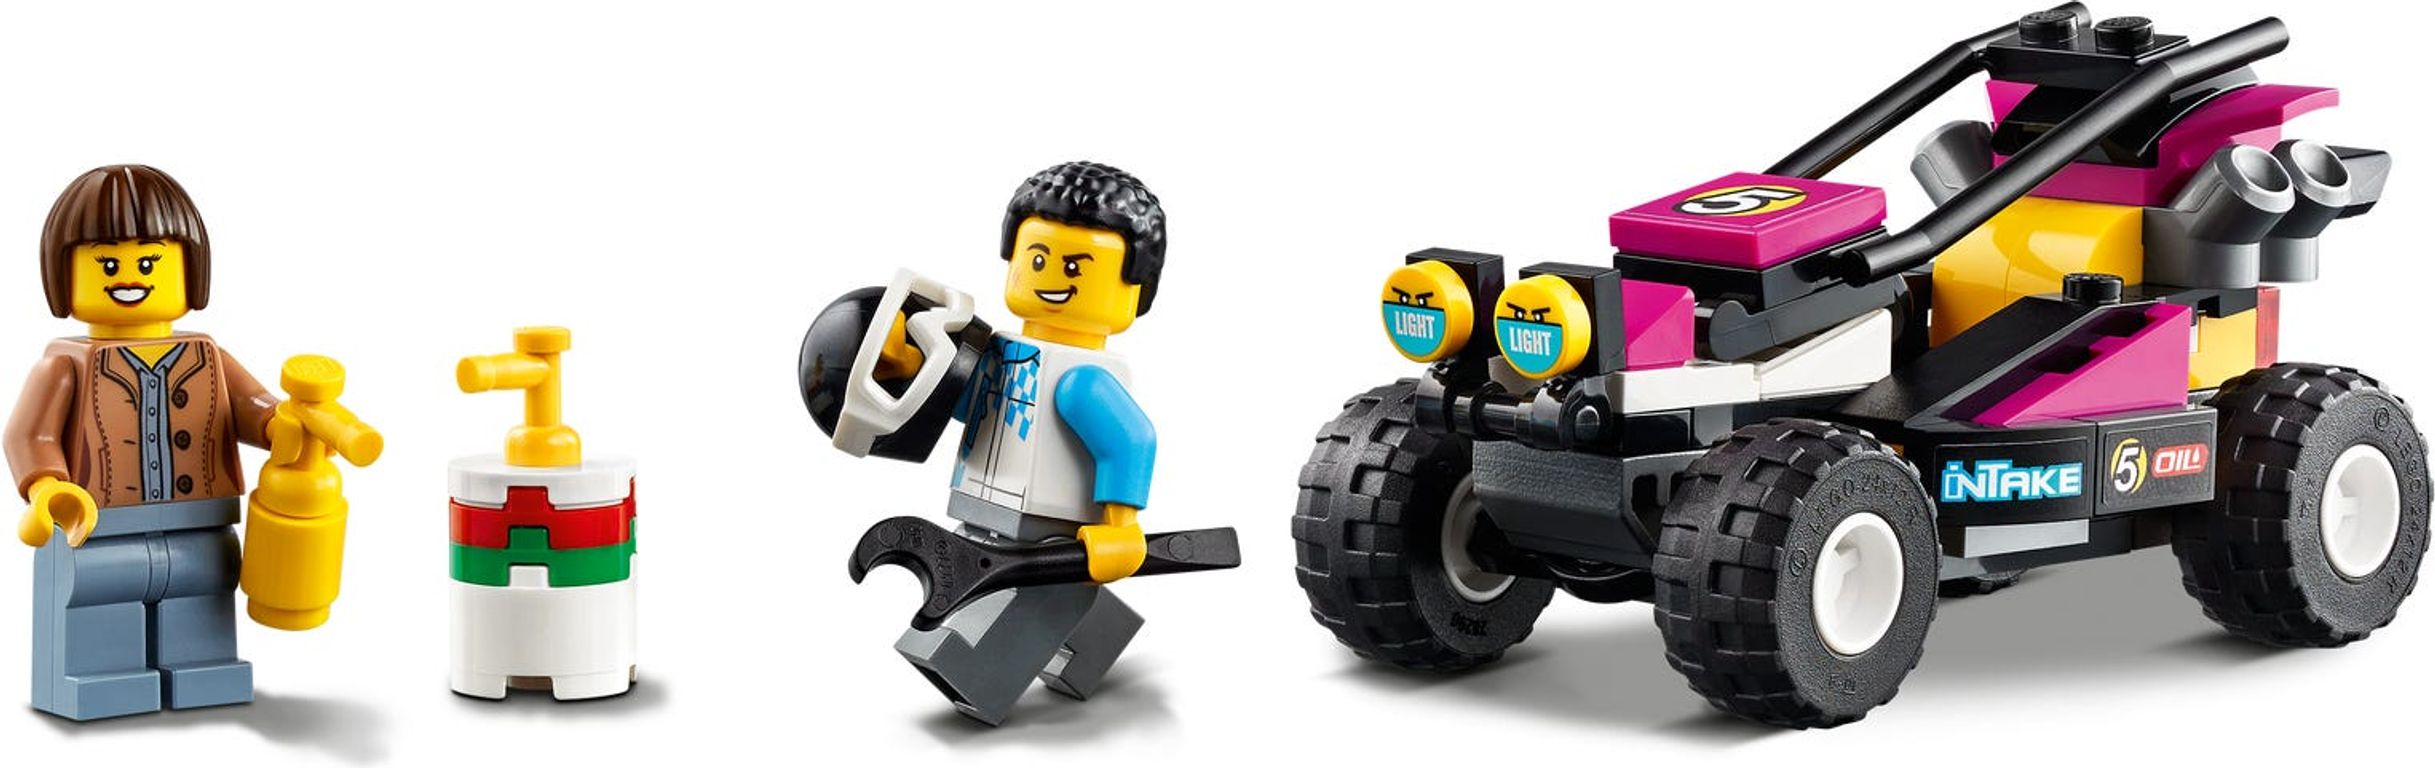 LEGO® City Race Buggy Transporter minifigures